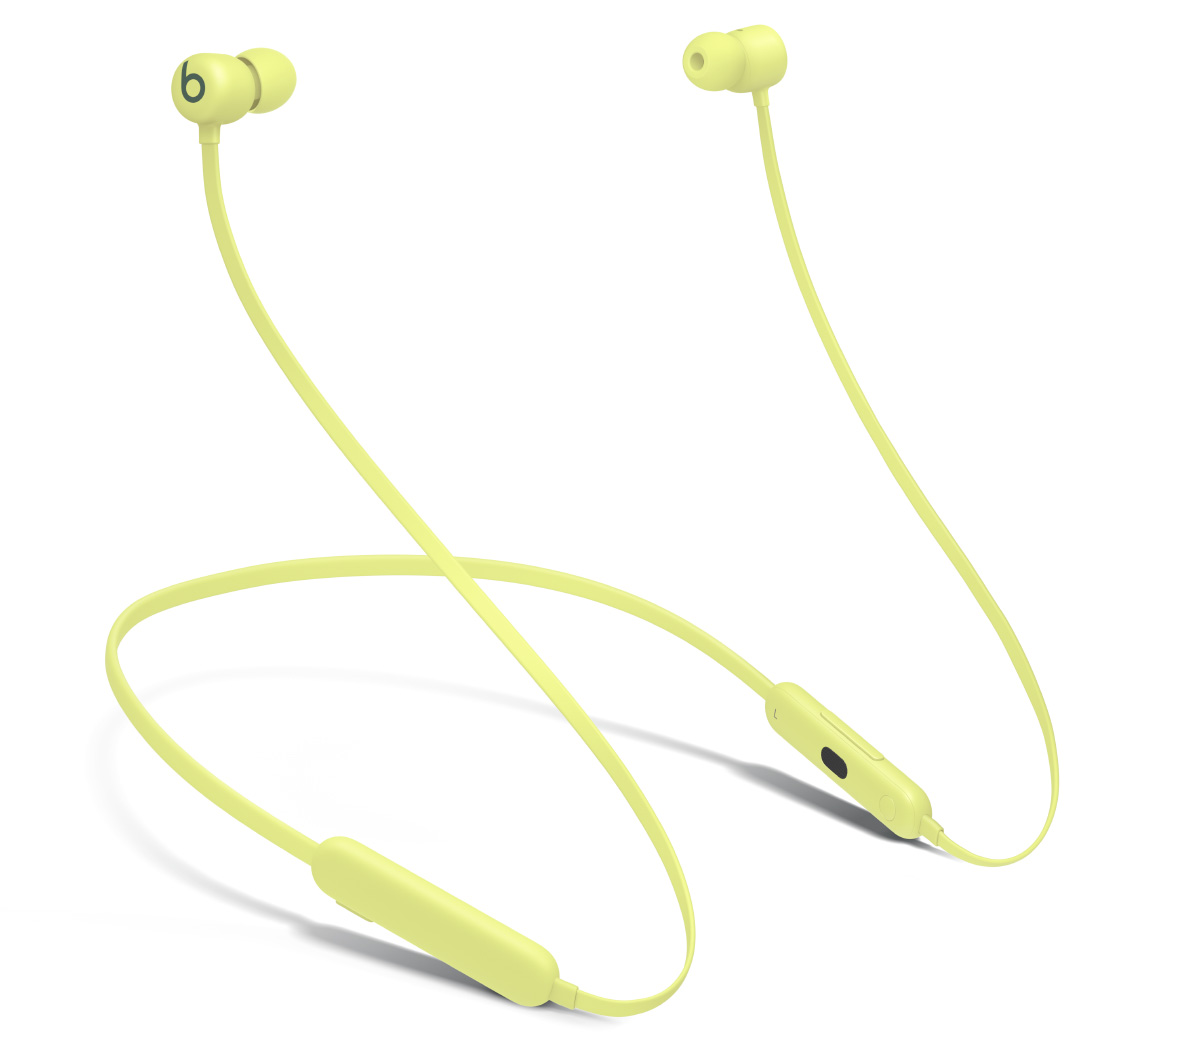 Beats Flex Wireless Headphones Review